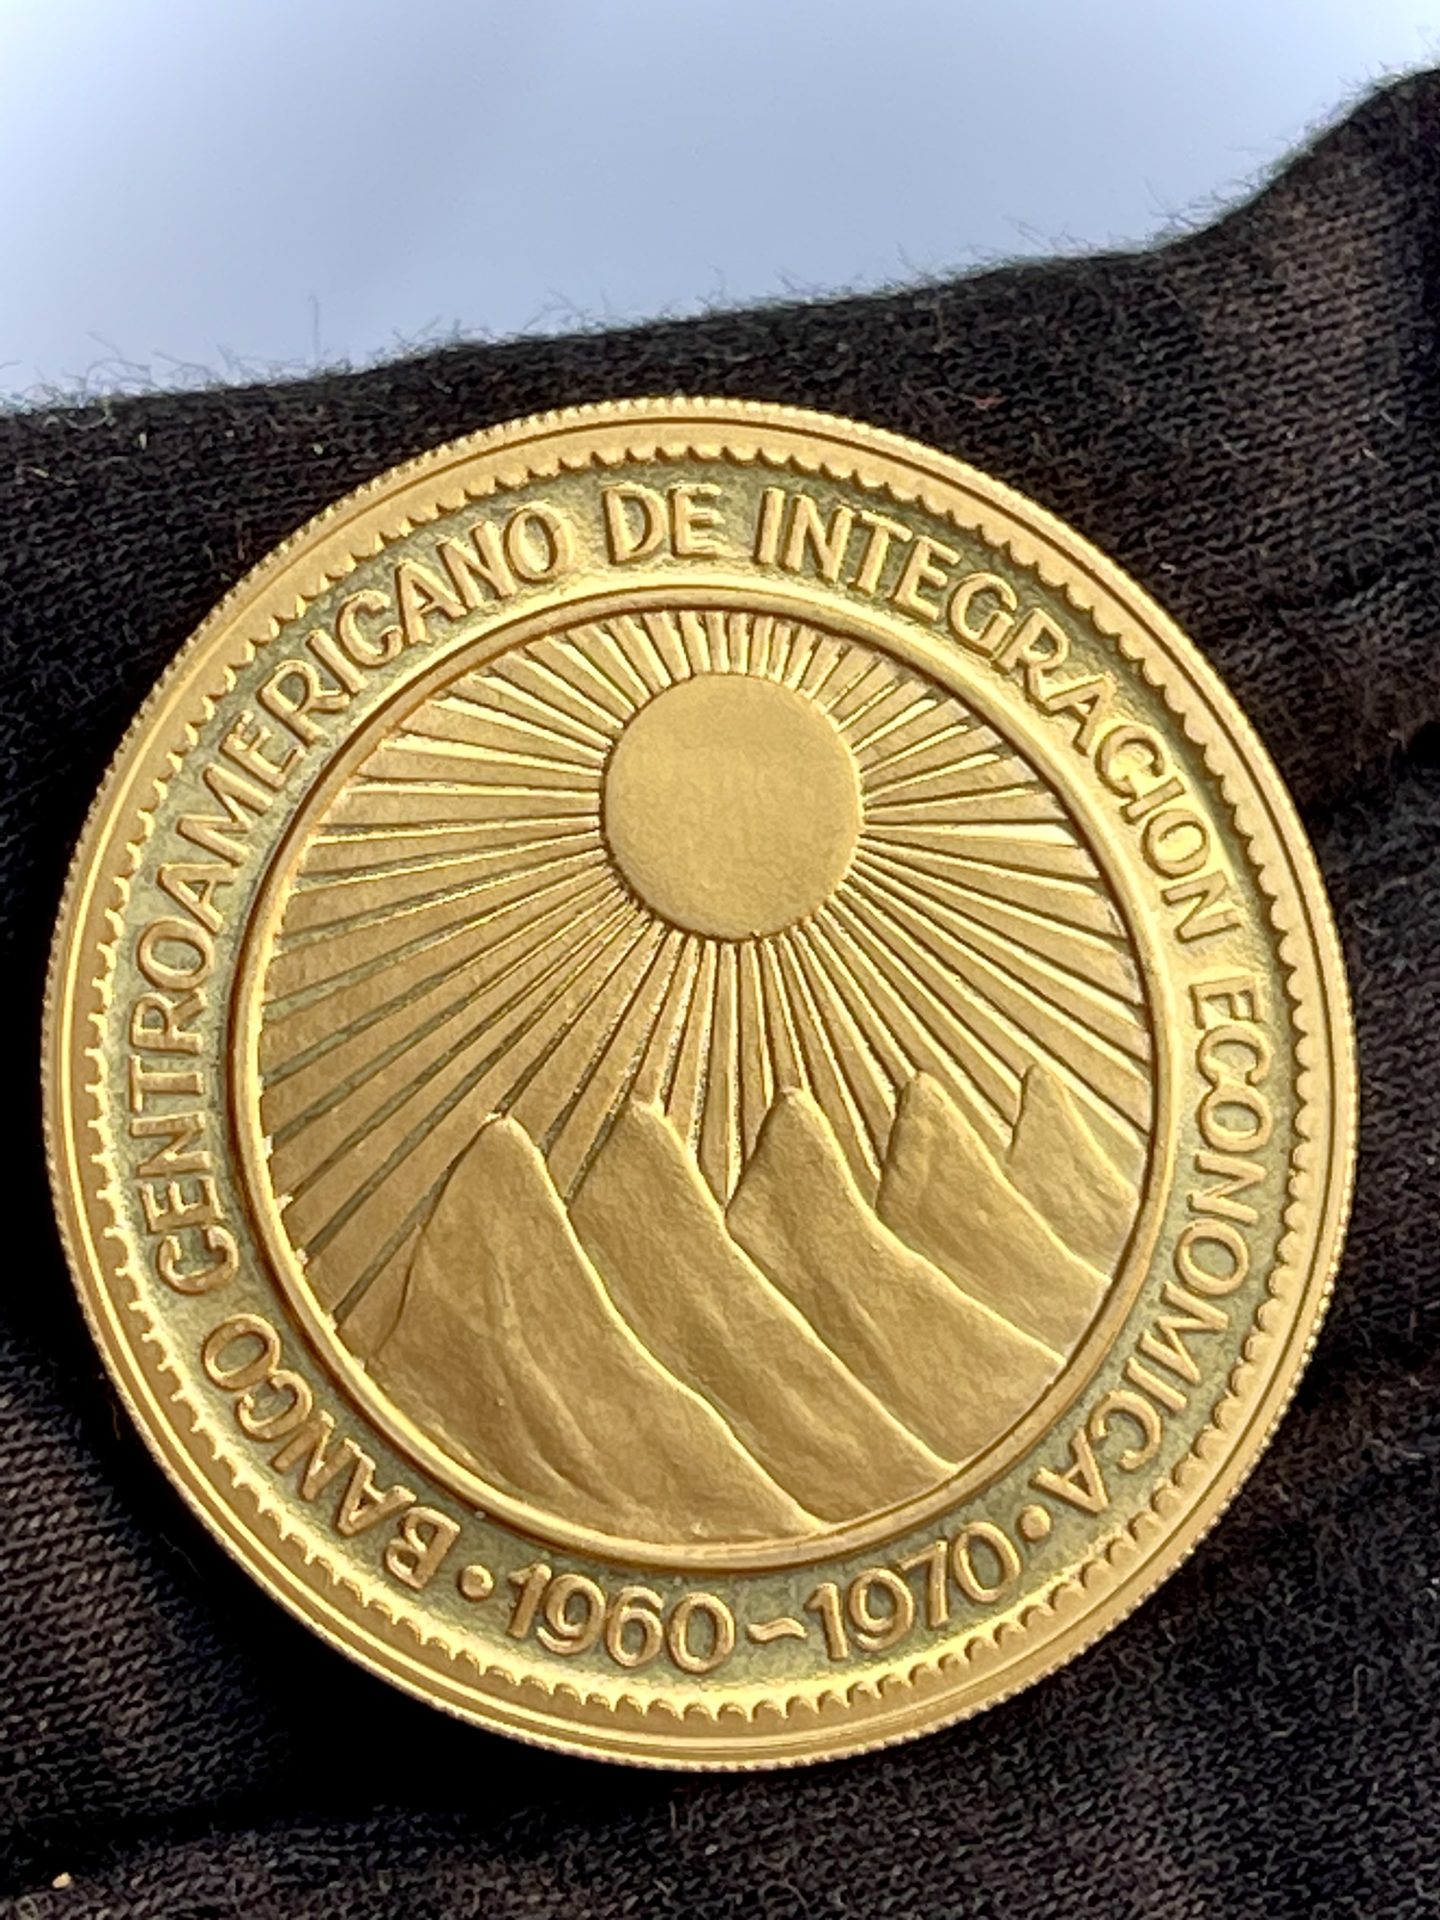 Centroamericanos 1970 50 gold pesos proof